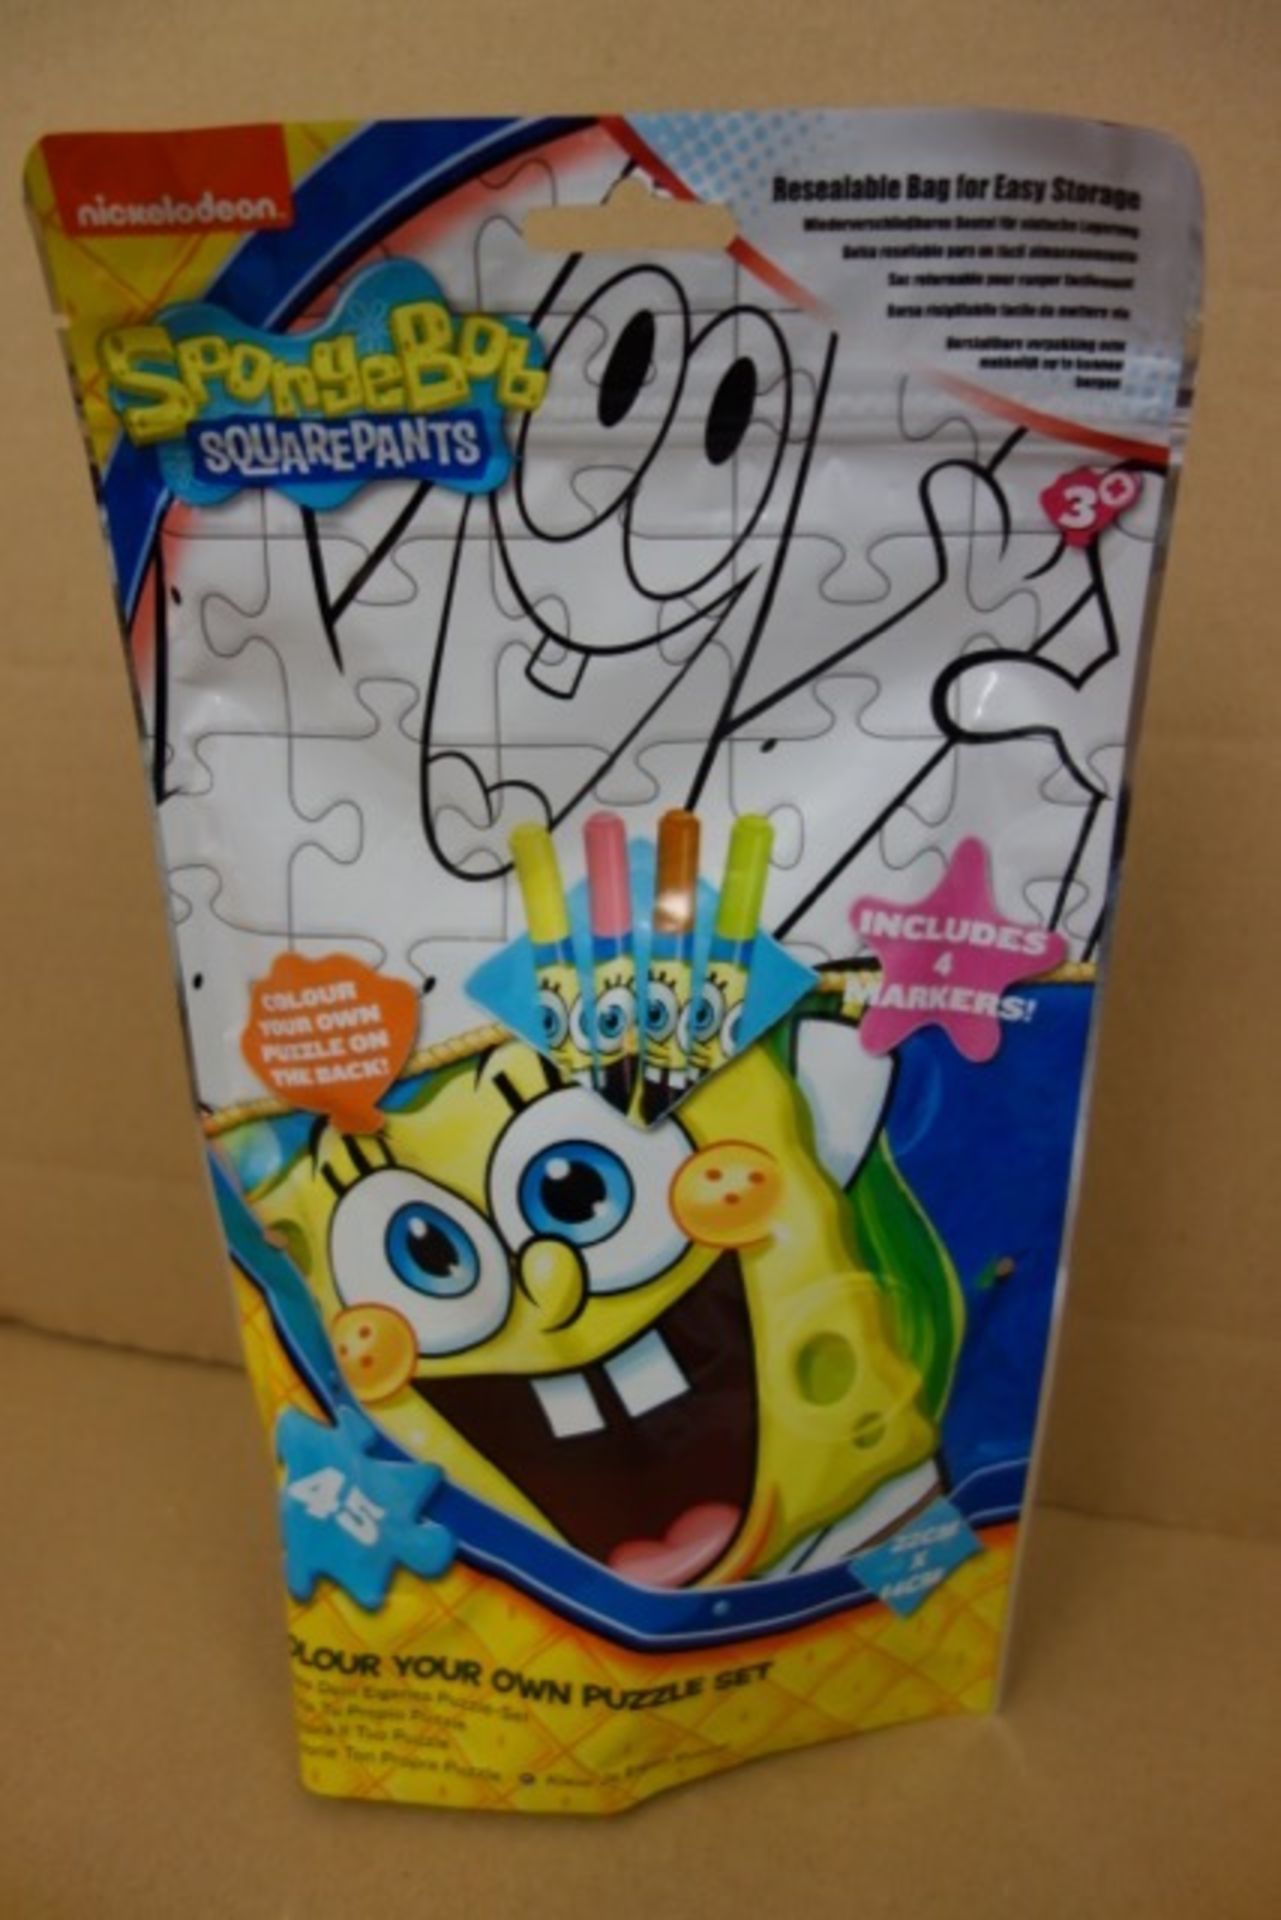 72 x Brand New Spongebob Squarepants Colour Your Own Puzzle Set. Includes Resealable Bag & 4 Makers.